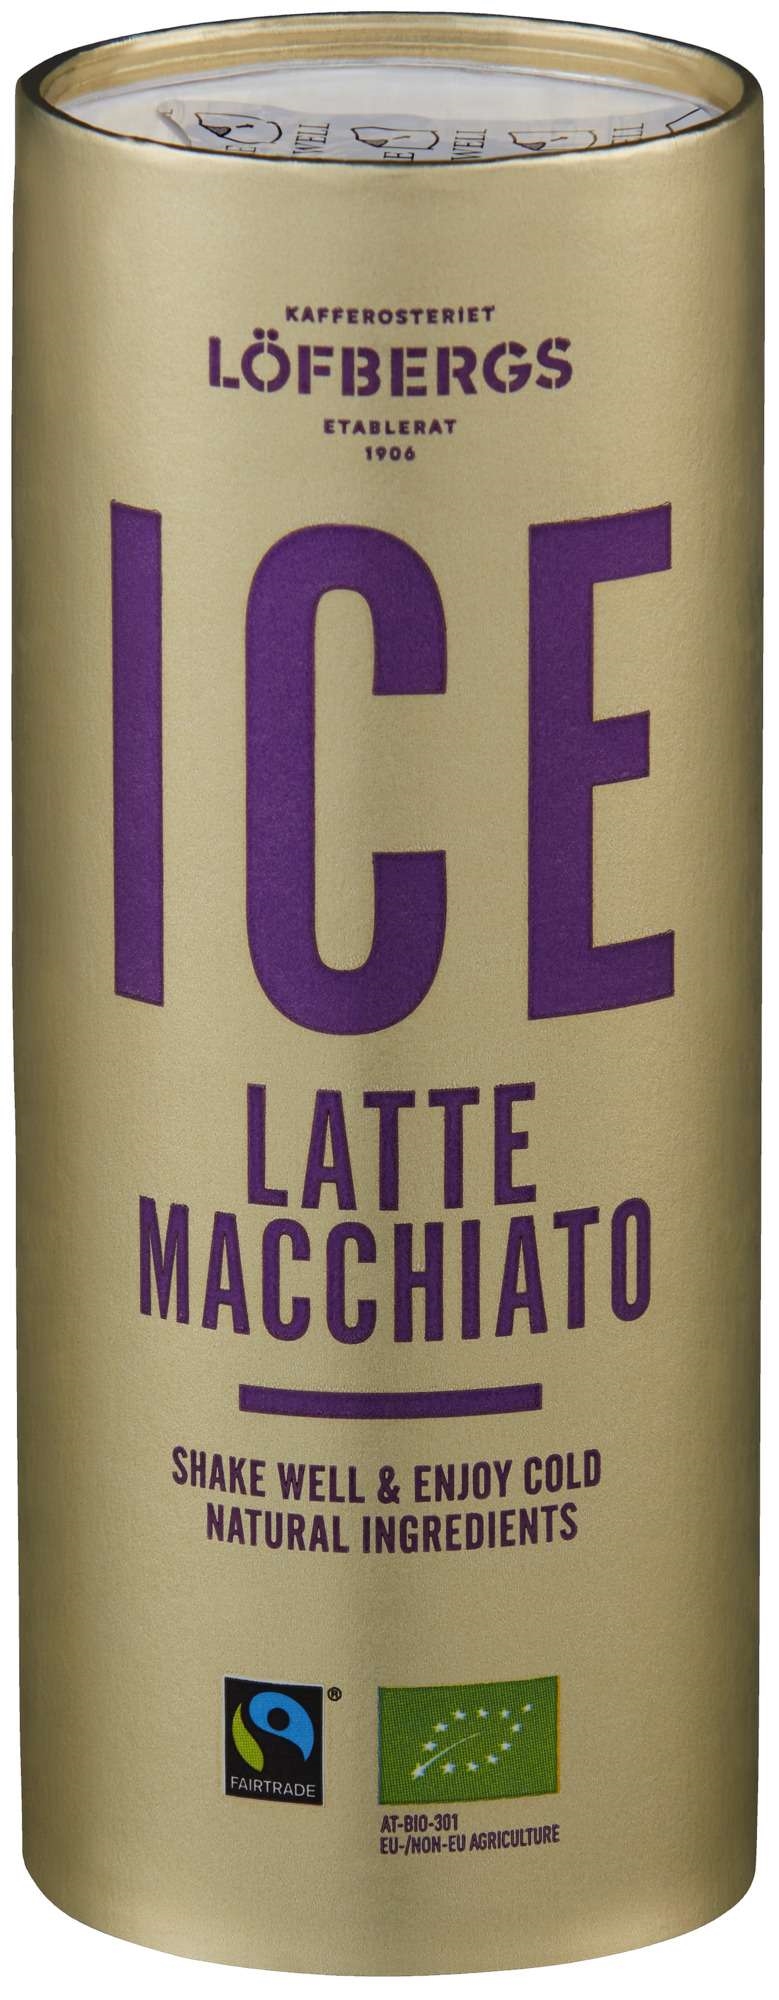 Iskaffe ice latte macchiato økol.&fairtrade  230ml